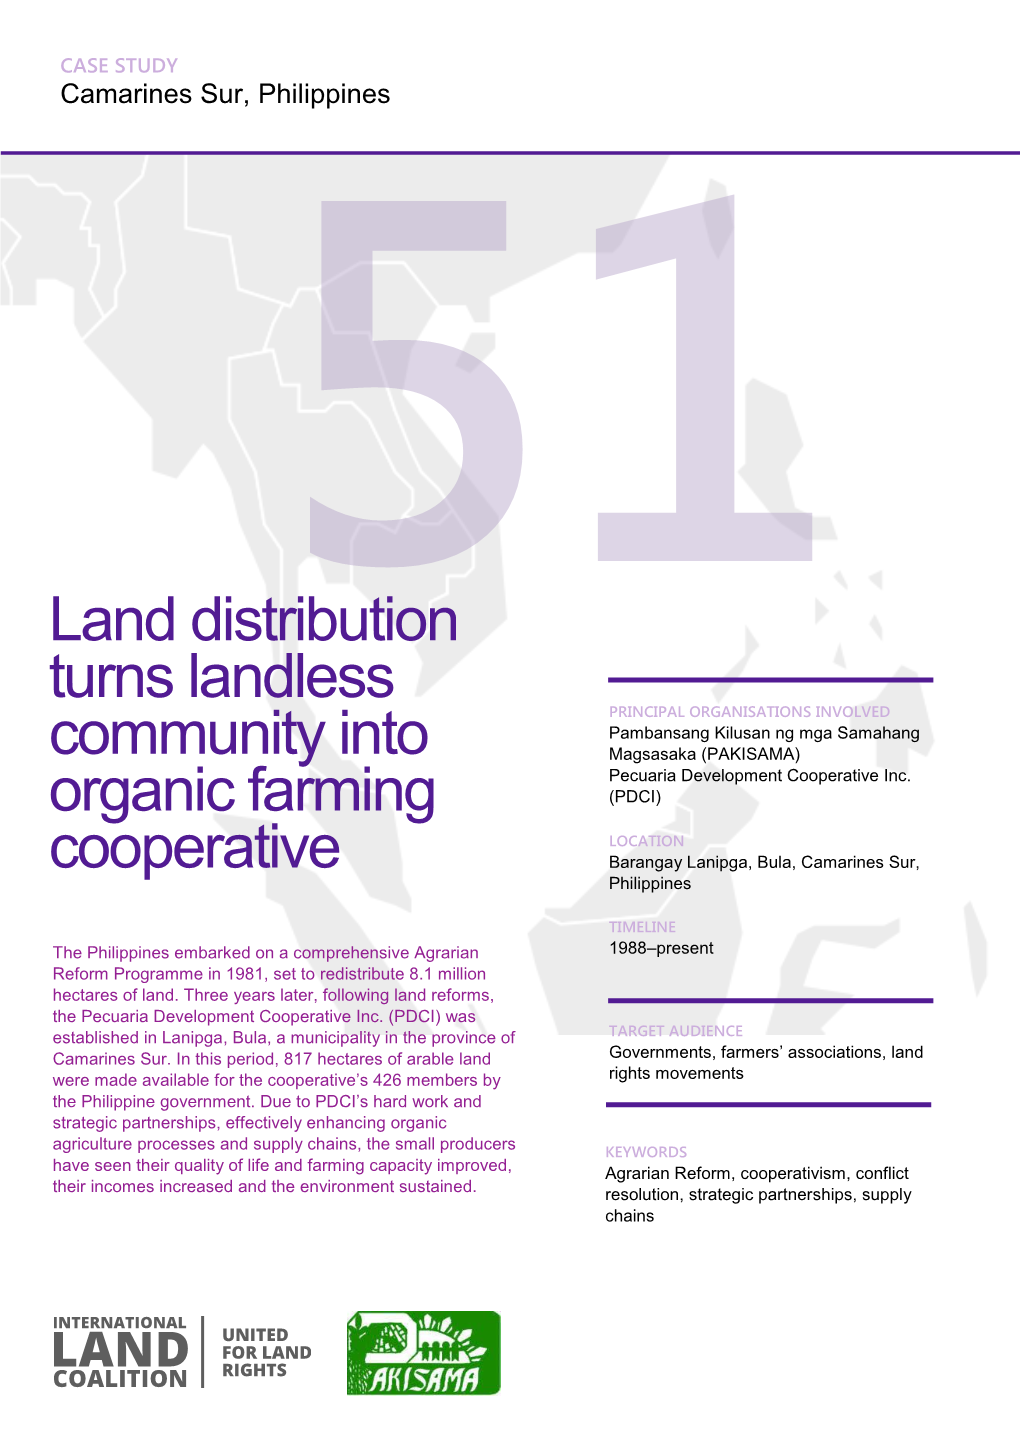 Land Distribution Turns Landless Community Into Organic Farming